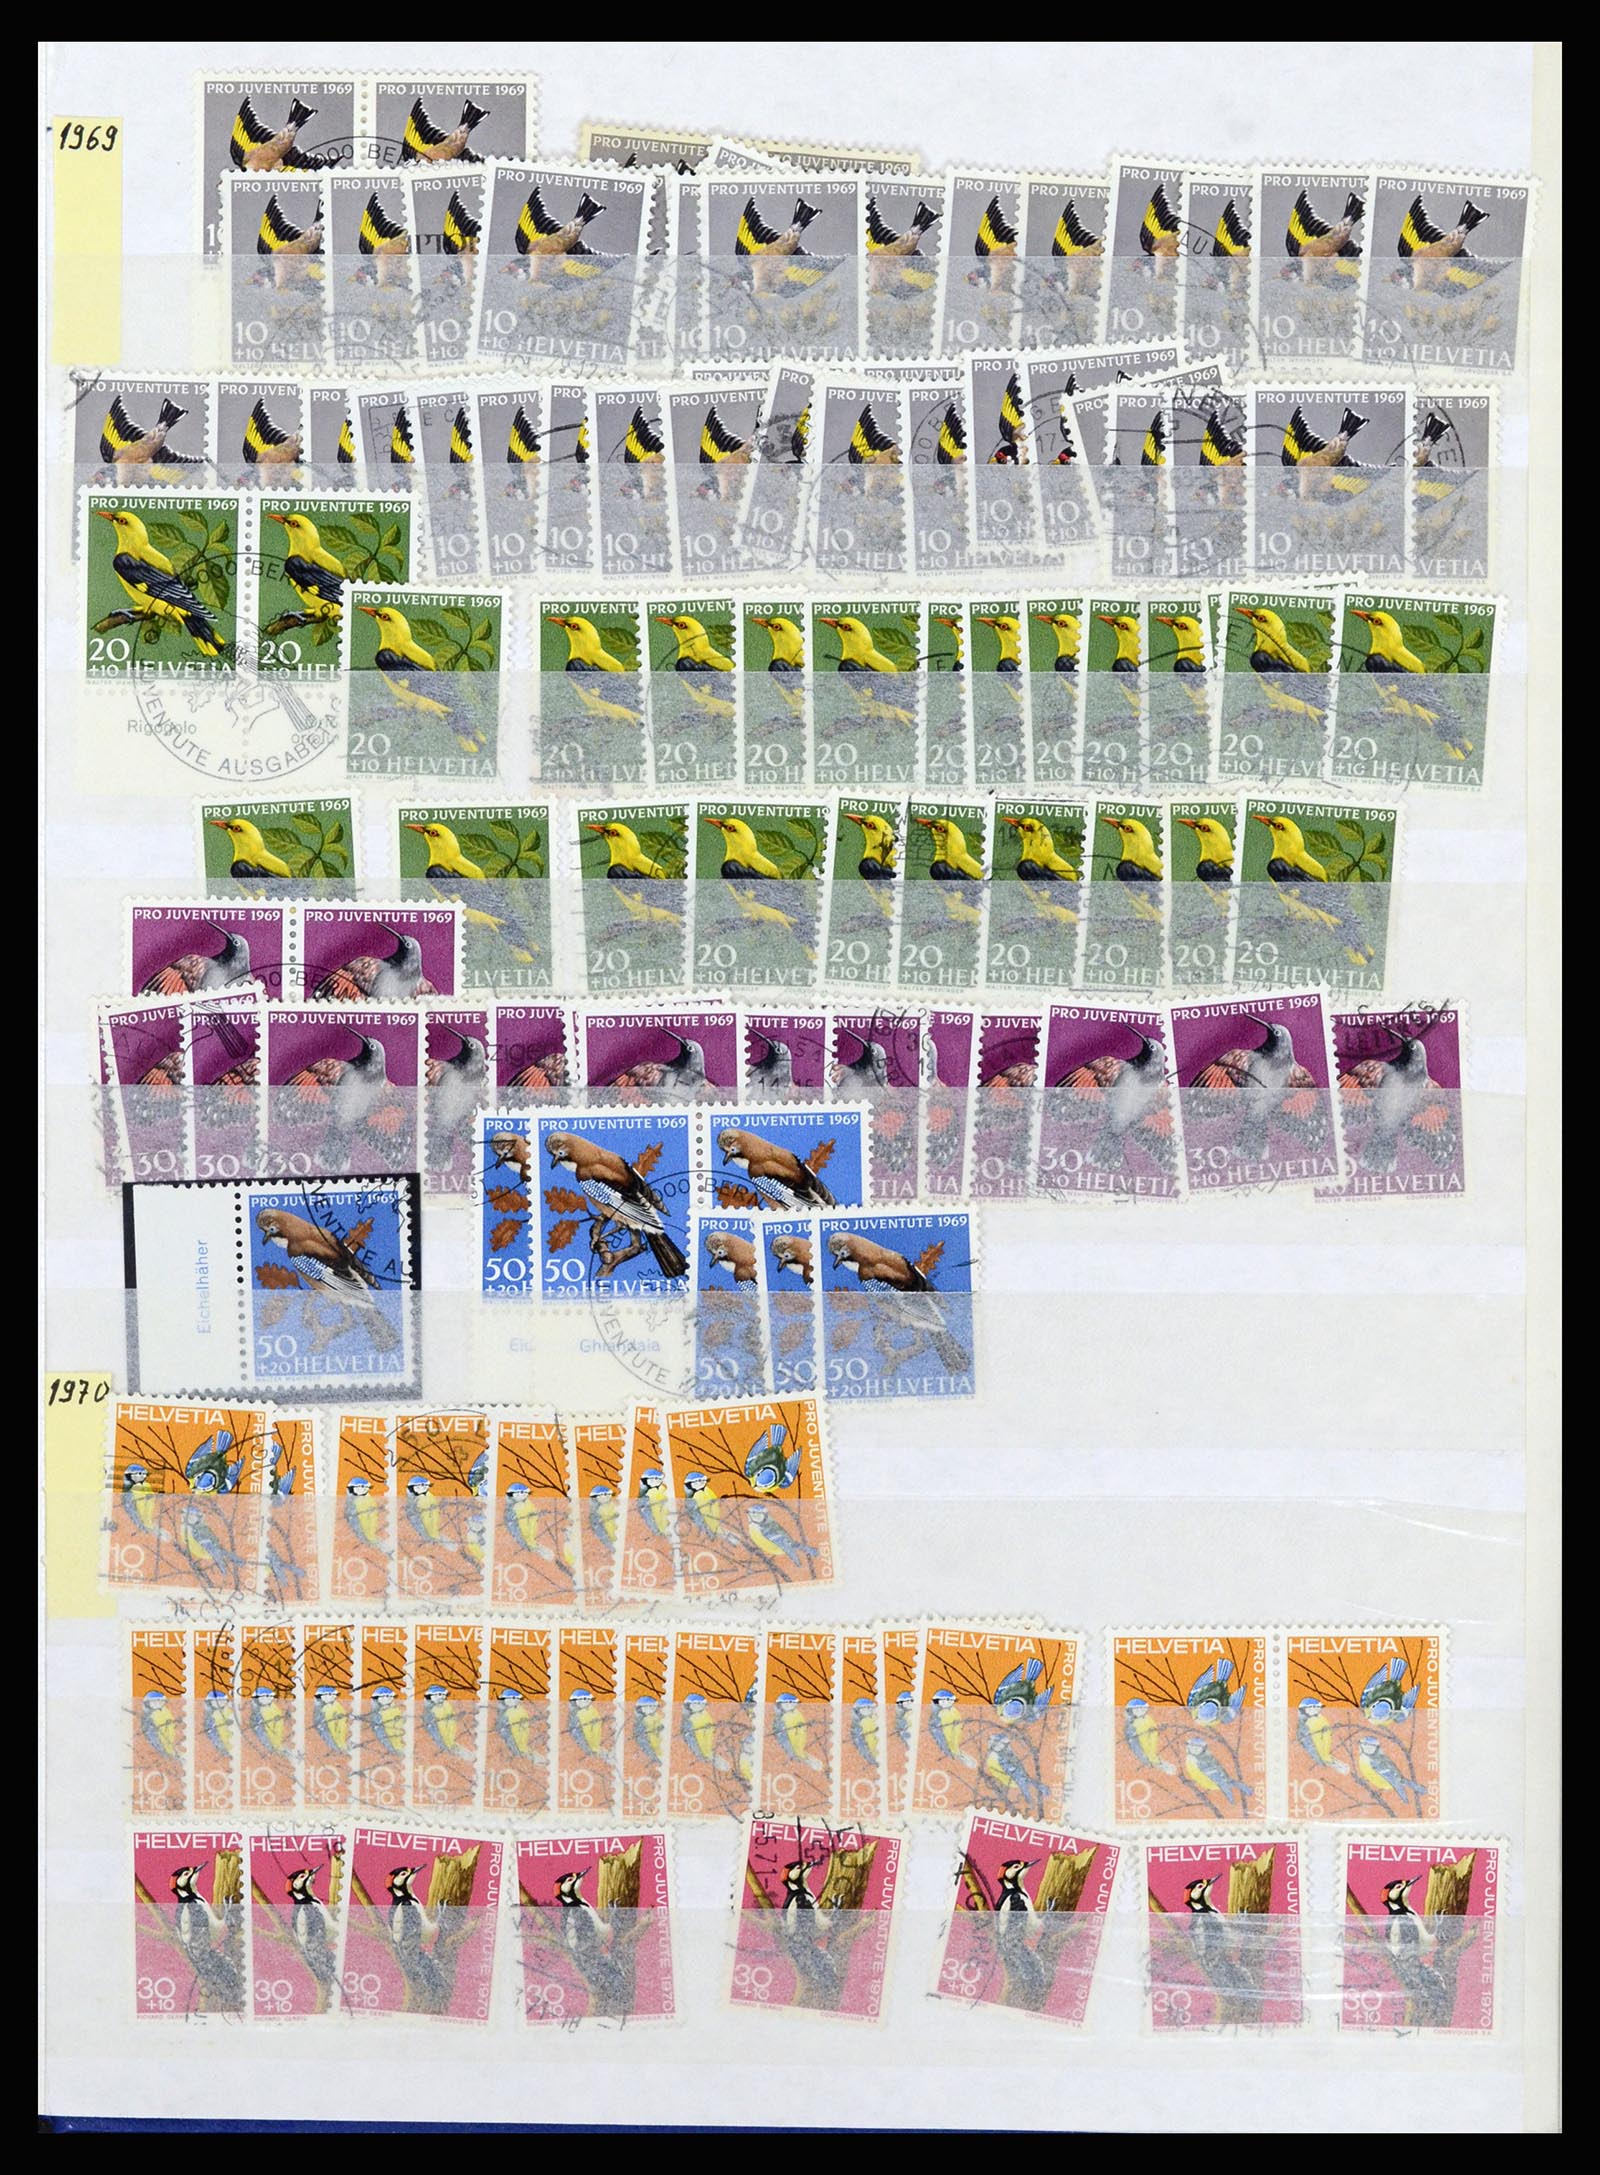 37061 021 - Stamp collection 37061 Switzerland 1913-2000.